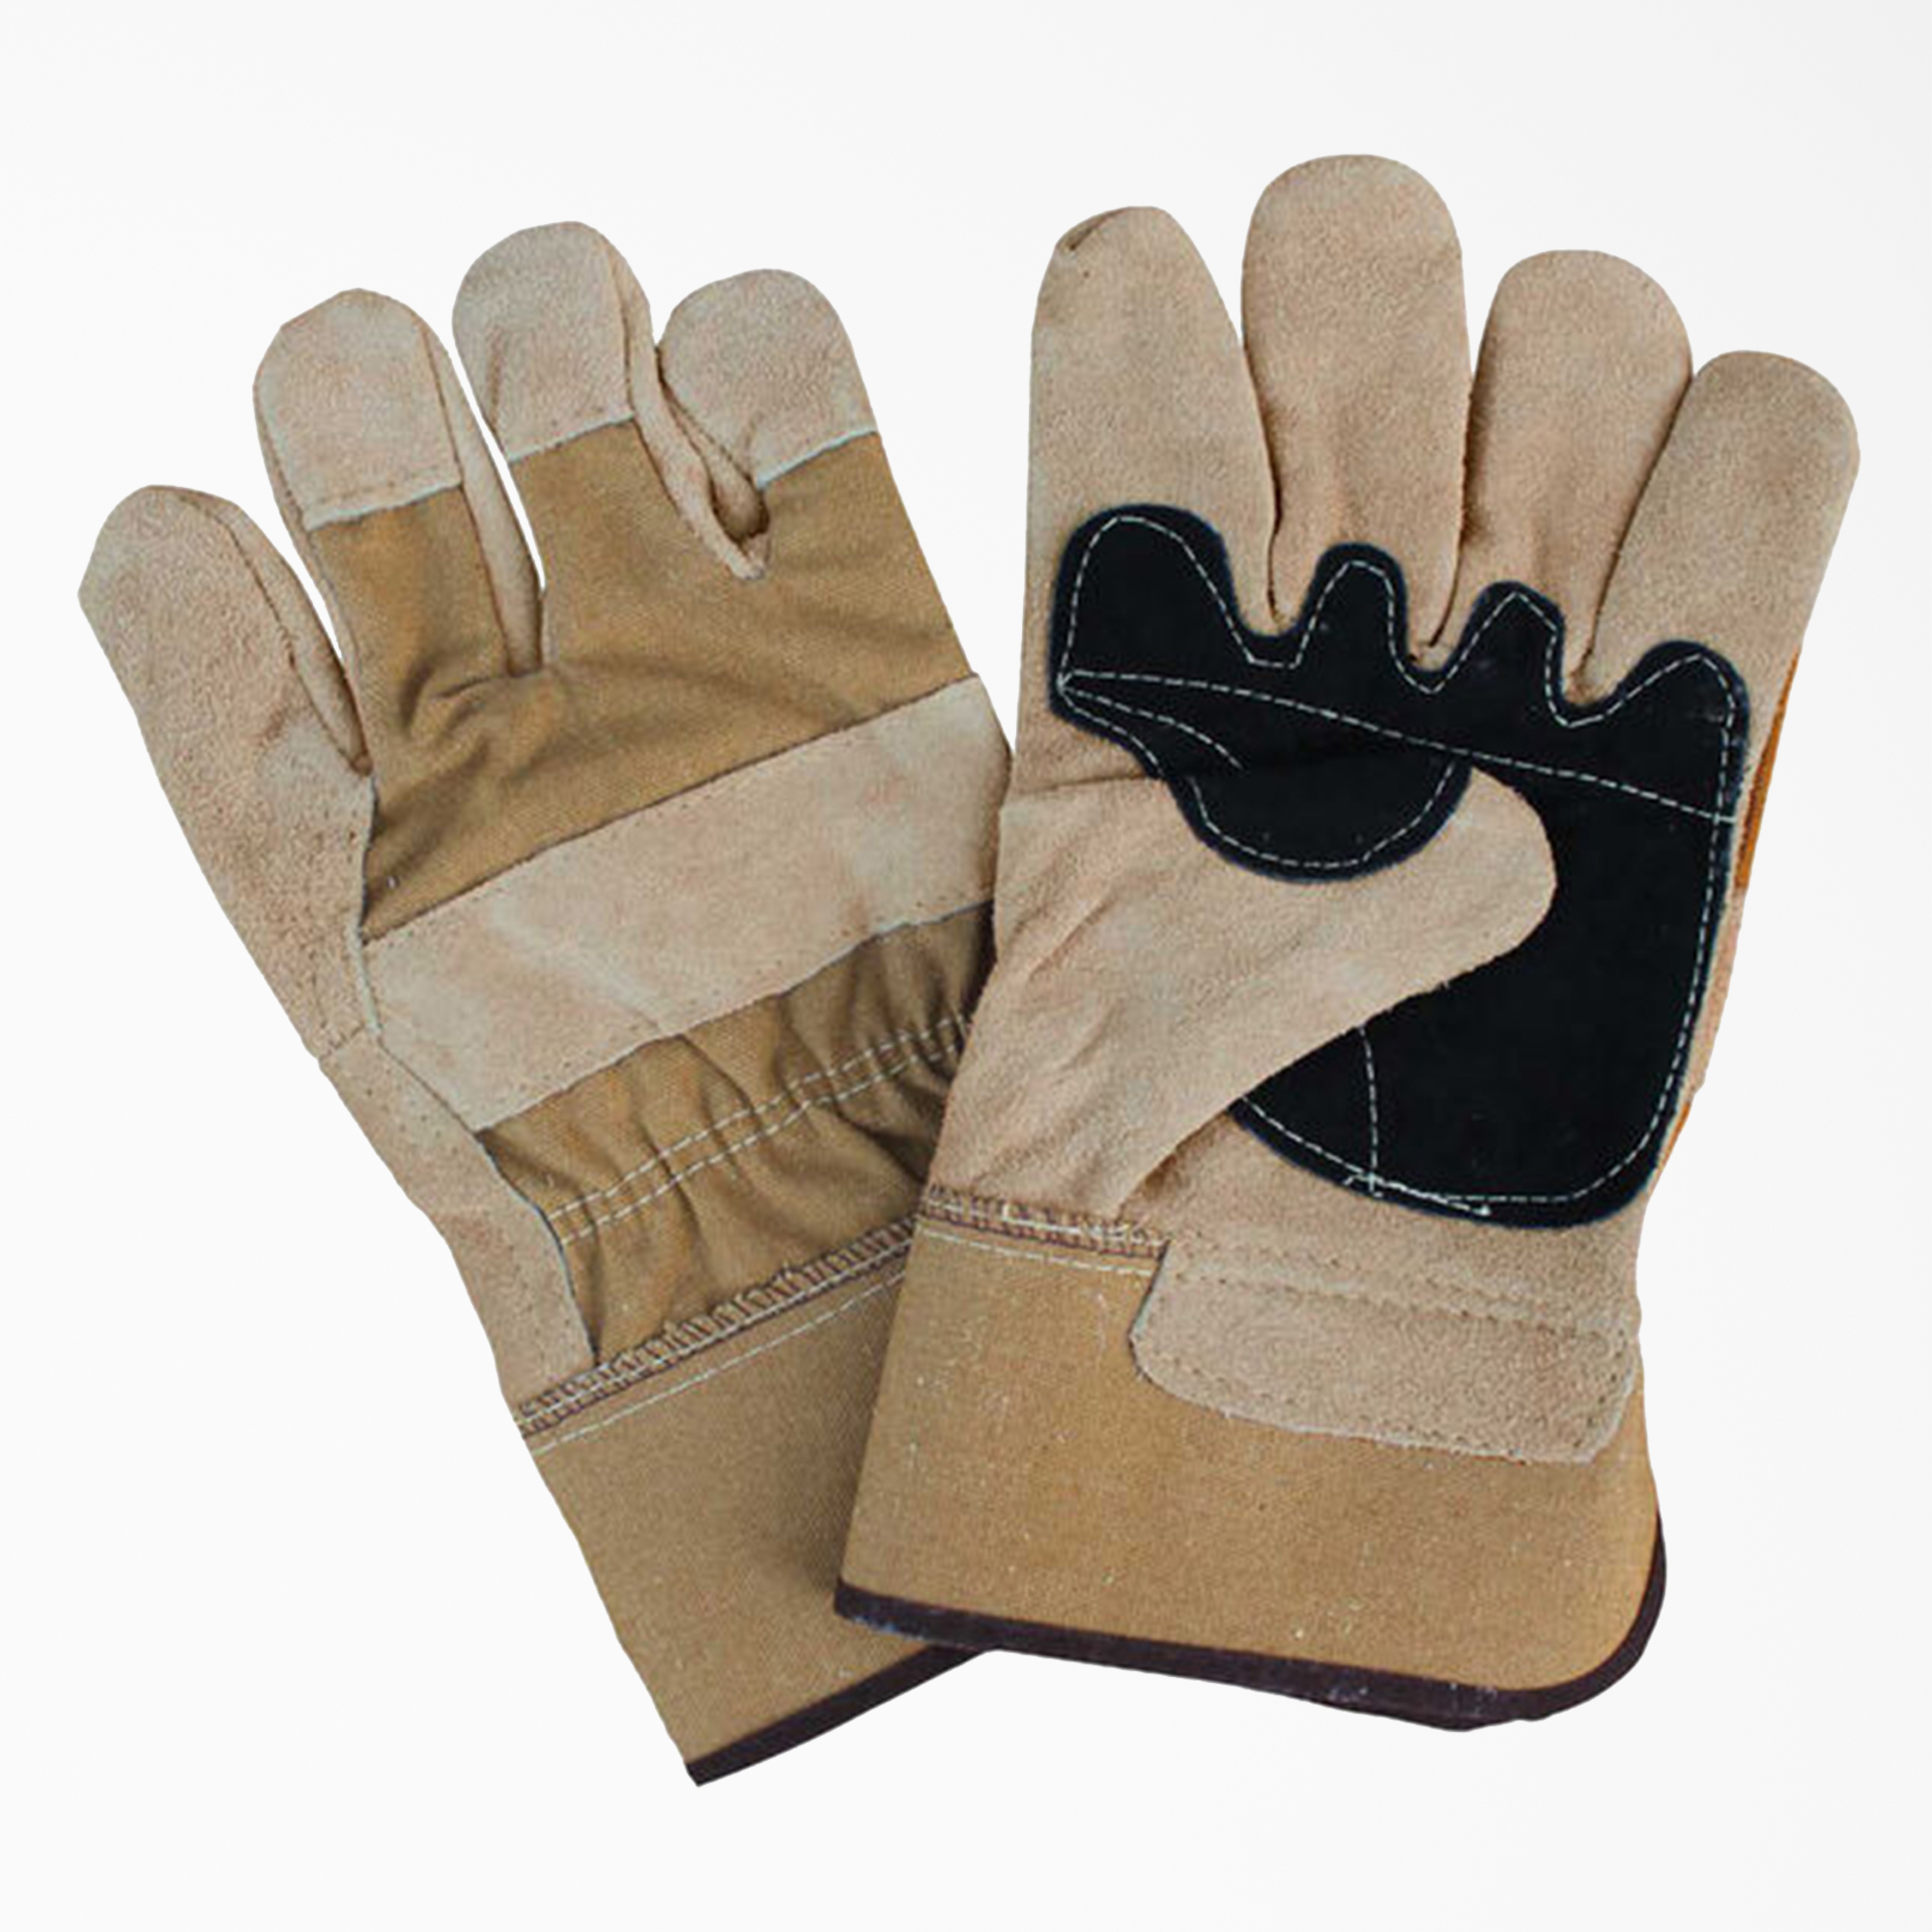 palm gloves